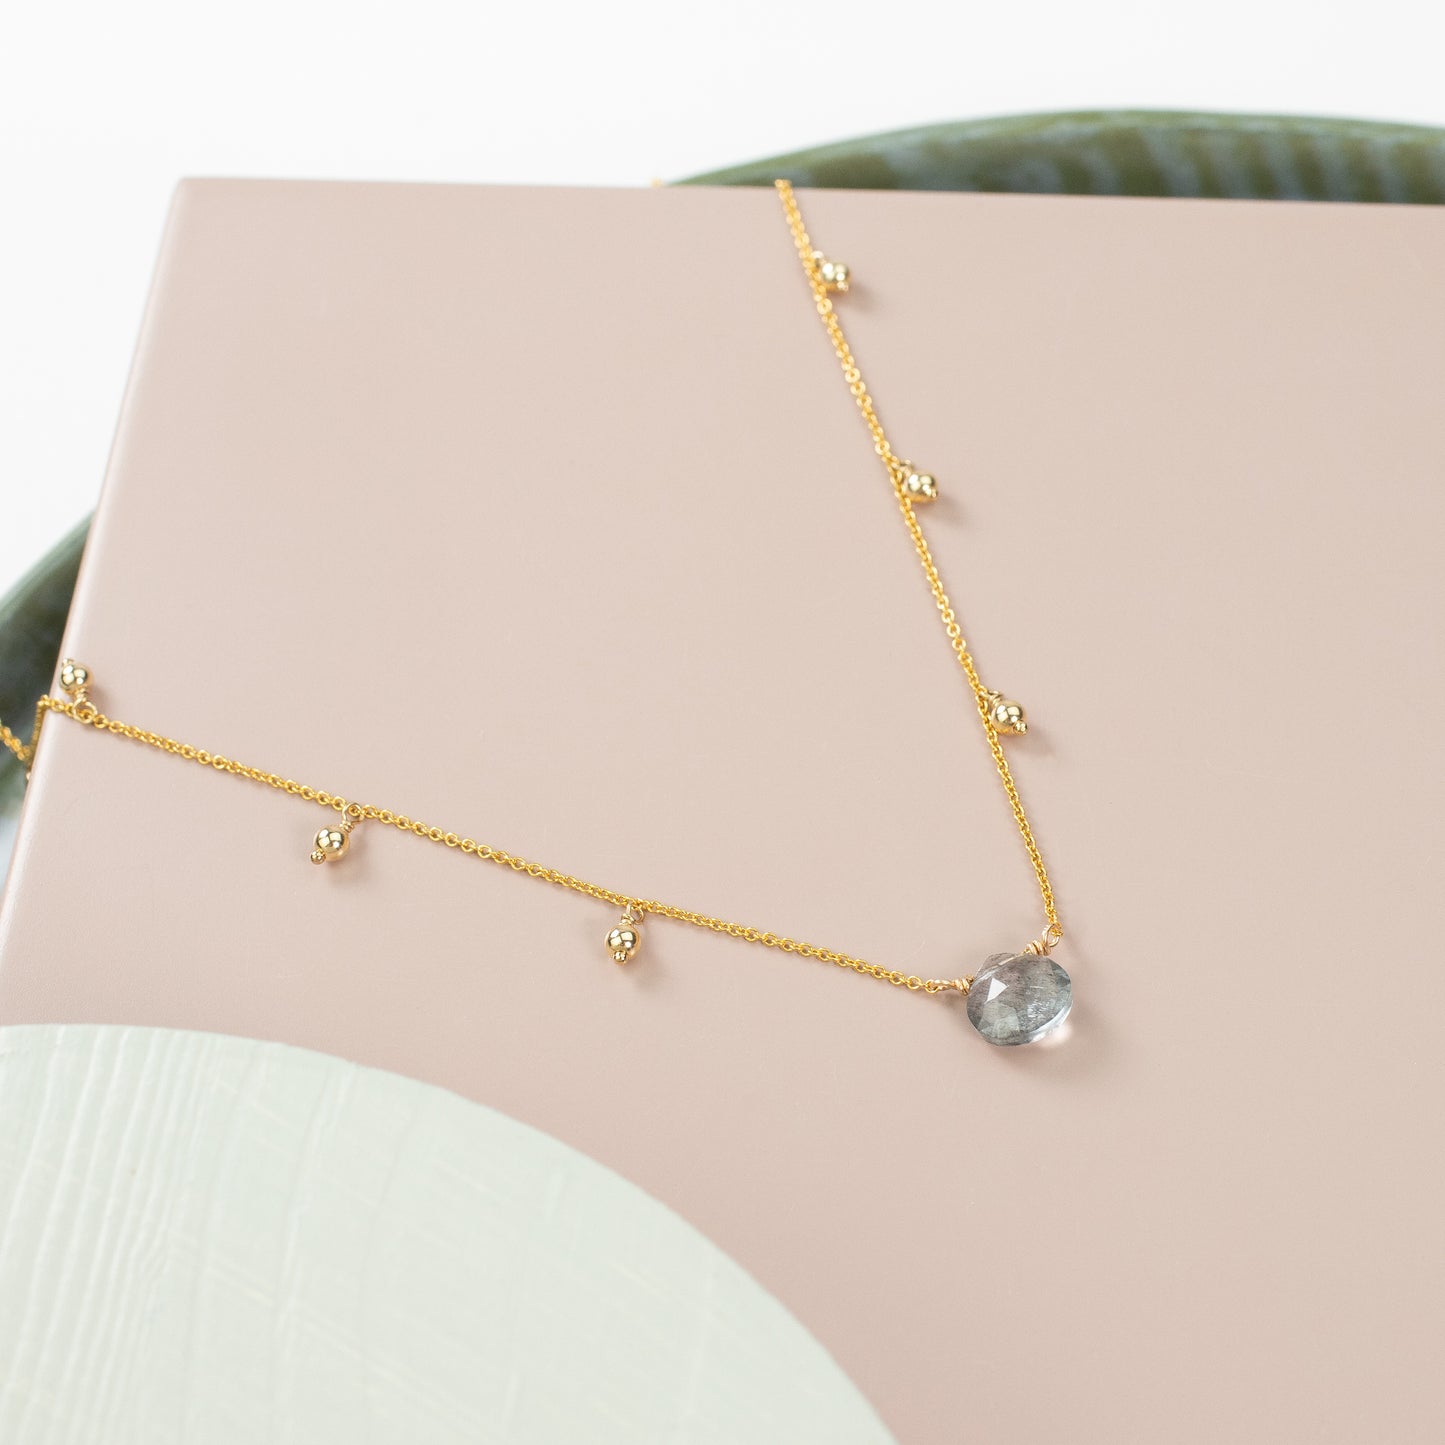 March Birthstone Briolette Choker Necklace - Aquamarine - Silver & Gold